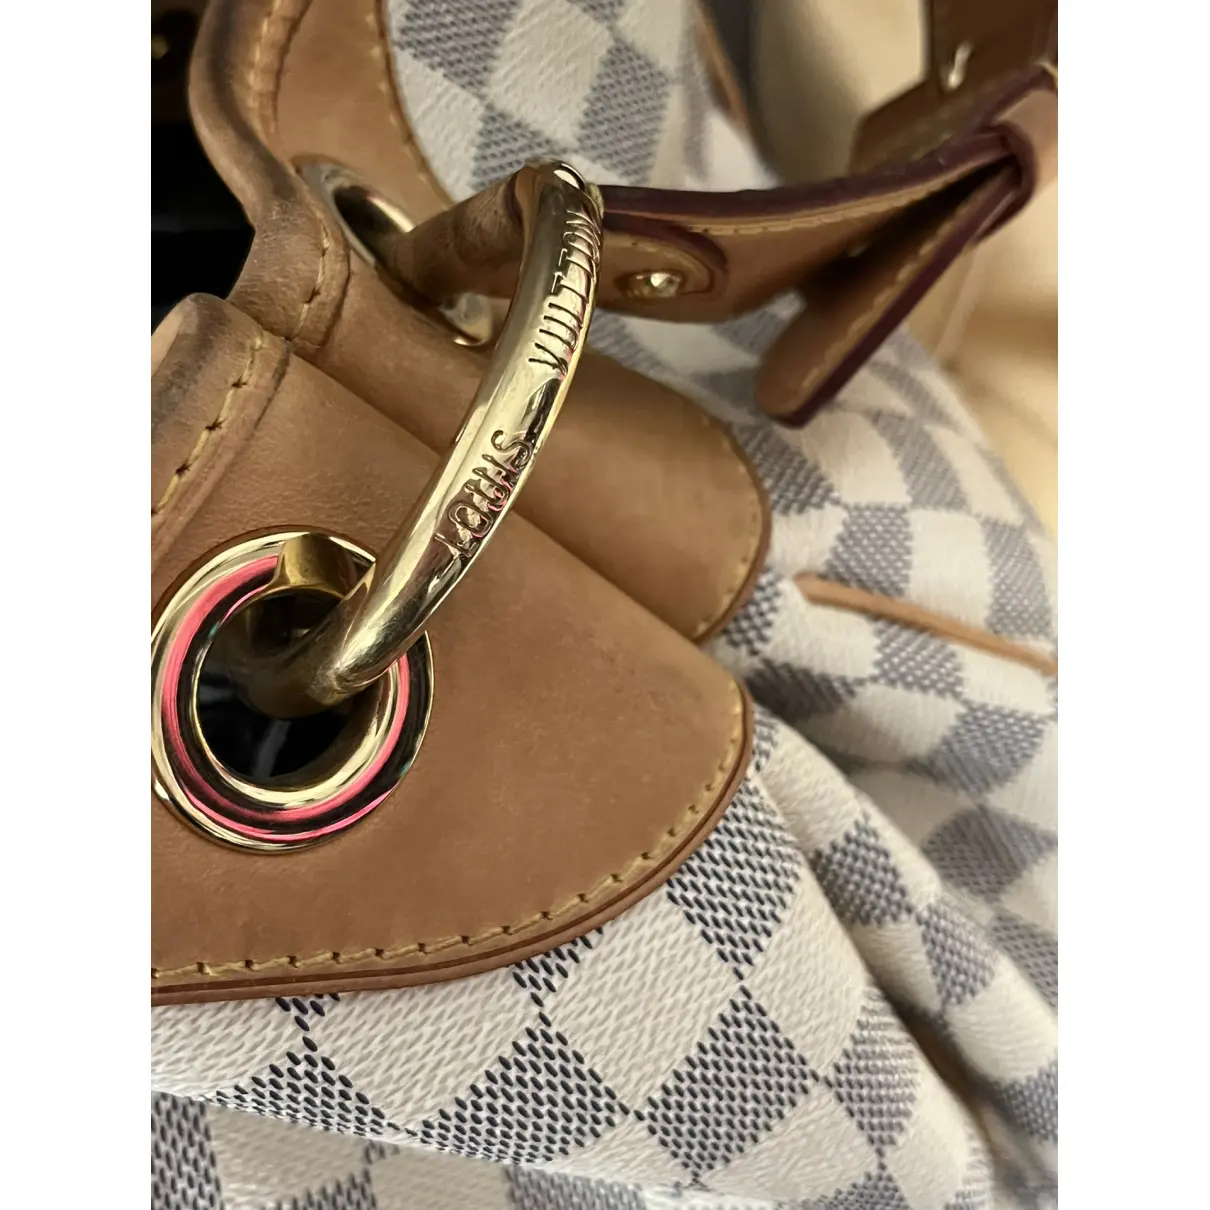 Galliera cloth handbag Louis Vuitton